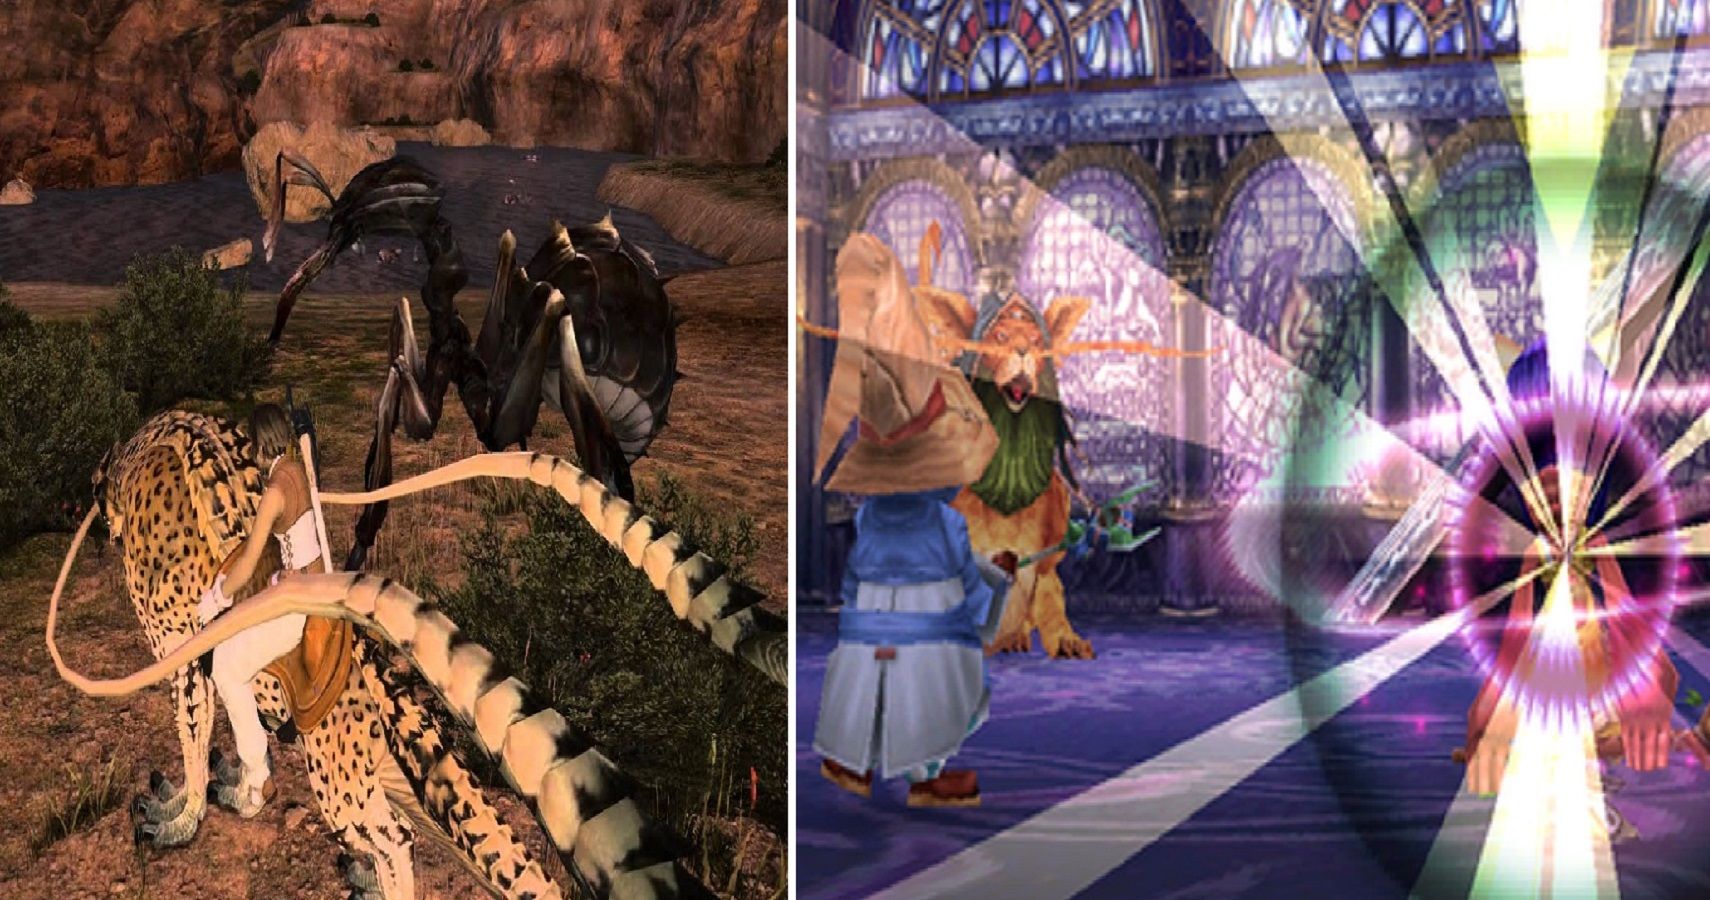 Final Fantasy XIV's Coeurl mount and Final Fantasy IX's Torama casting Blaster